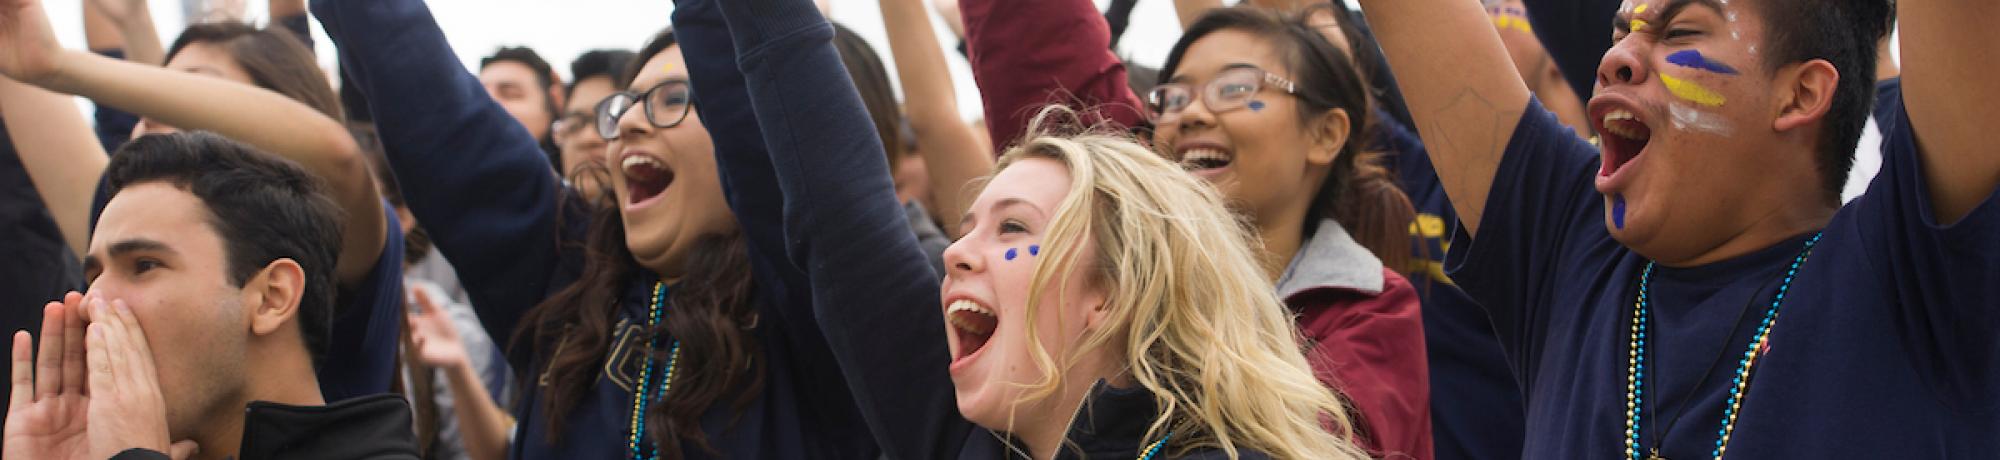 Group of UC Davis students yelling at homecoming